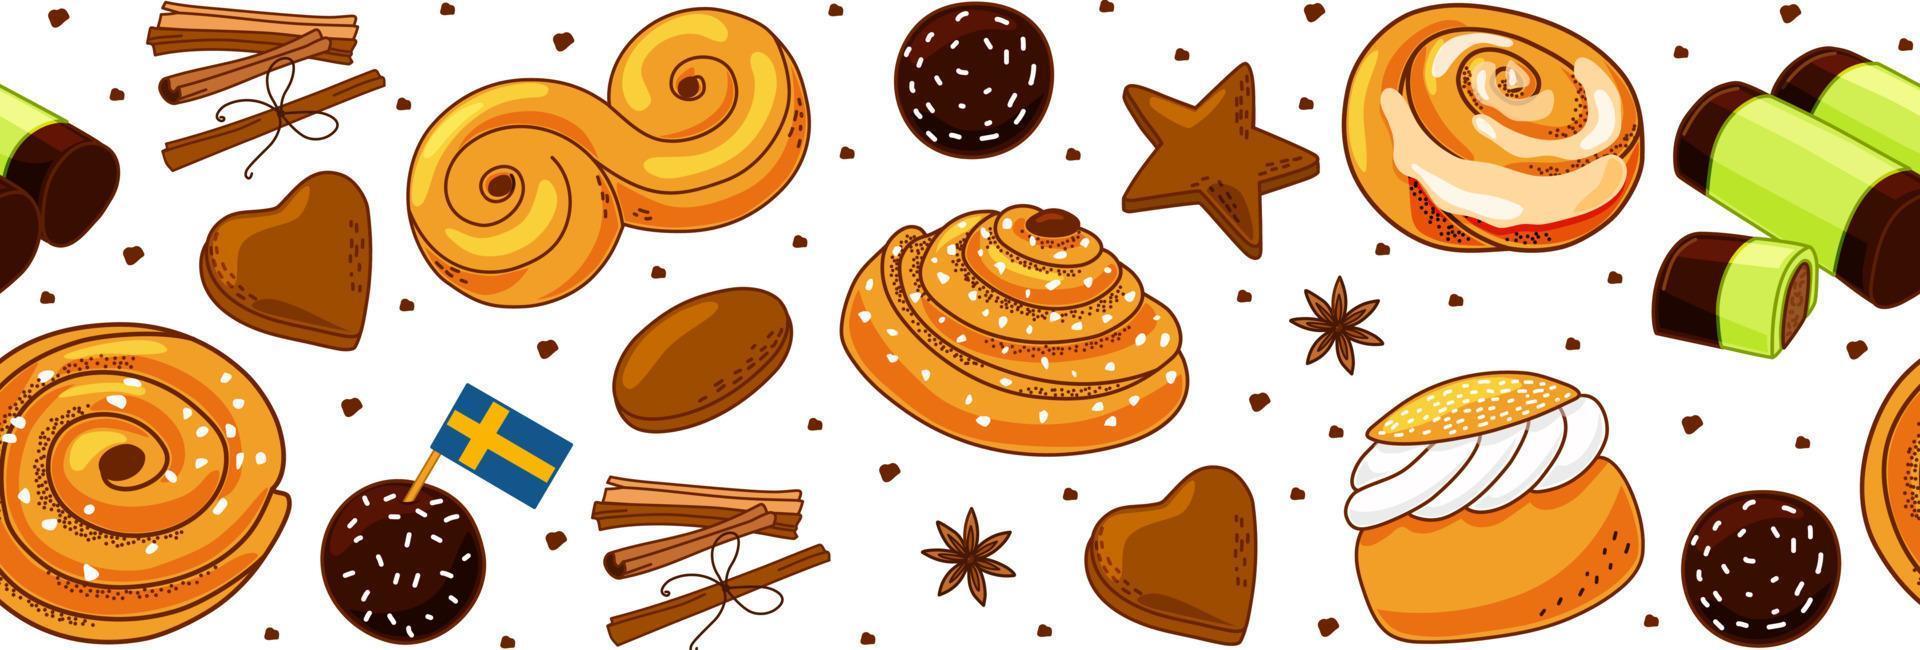 traditionele zweedse snoepjes naadloze grens. kanelbulle-broodje, kaneelbroodje, pepparkakor, semla, lussekatt, dammsugare en chokladboll. vector cartoon illustratie